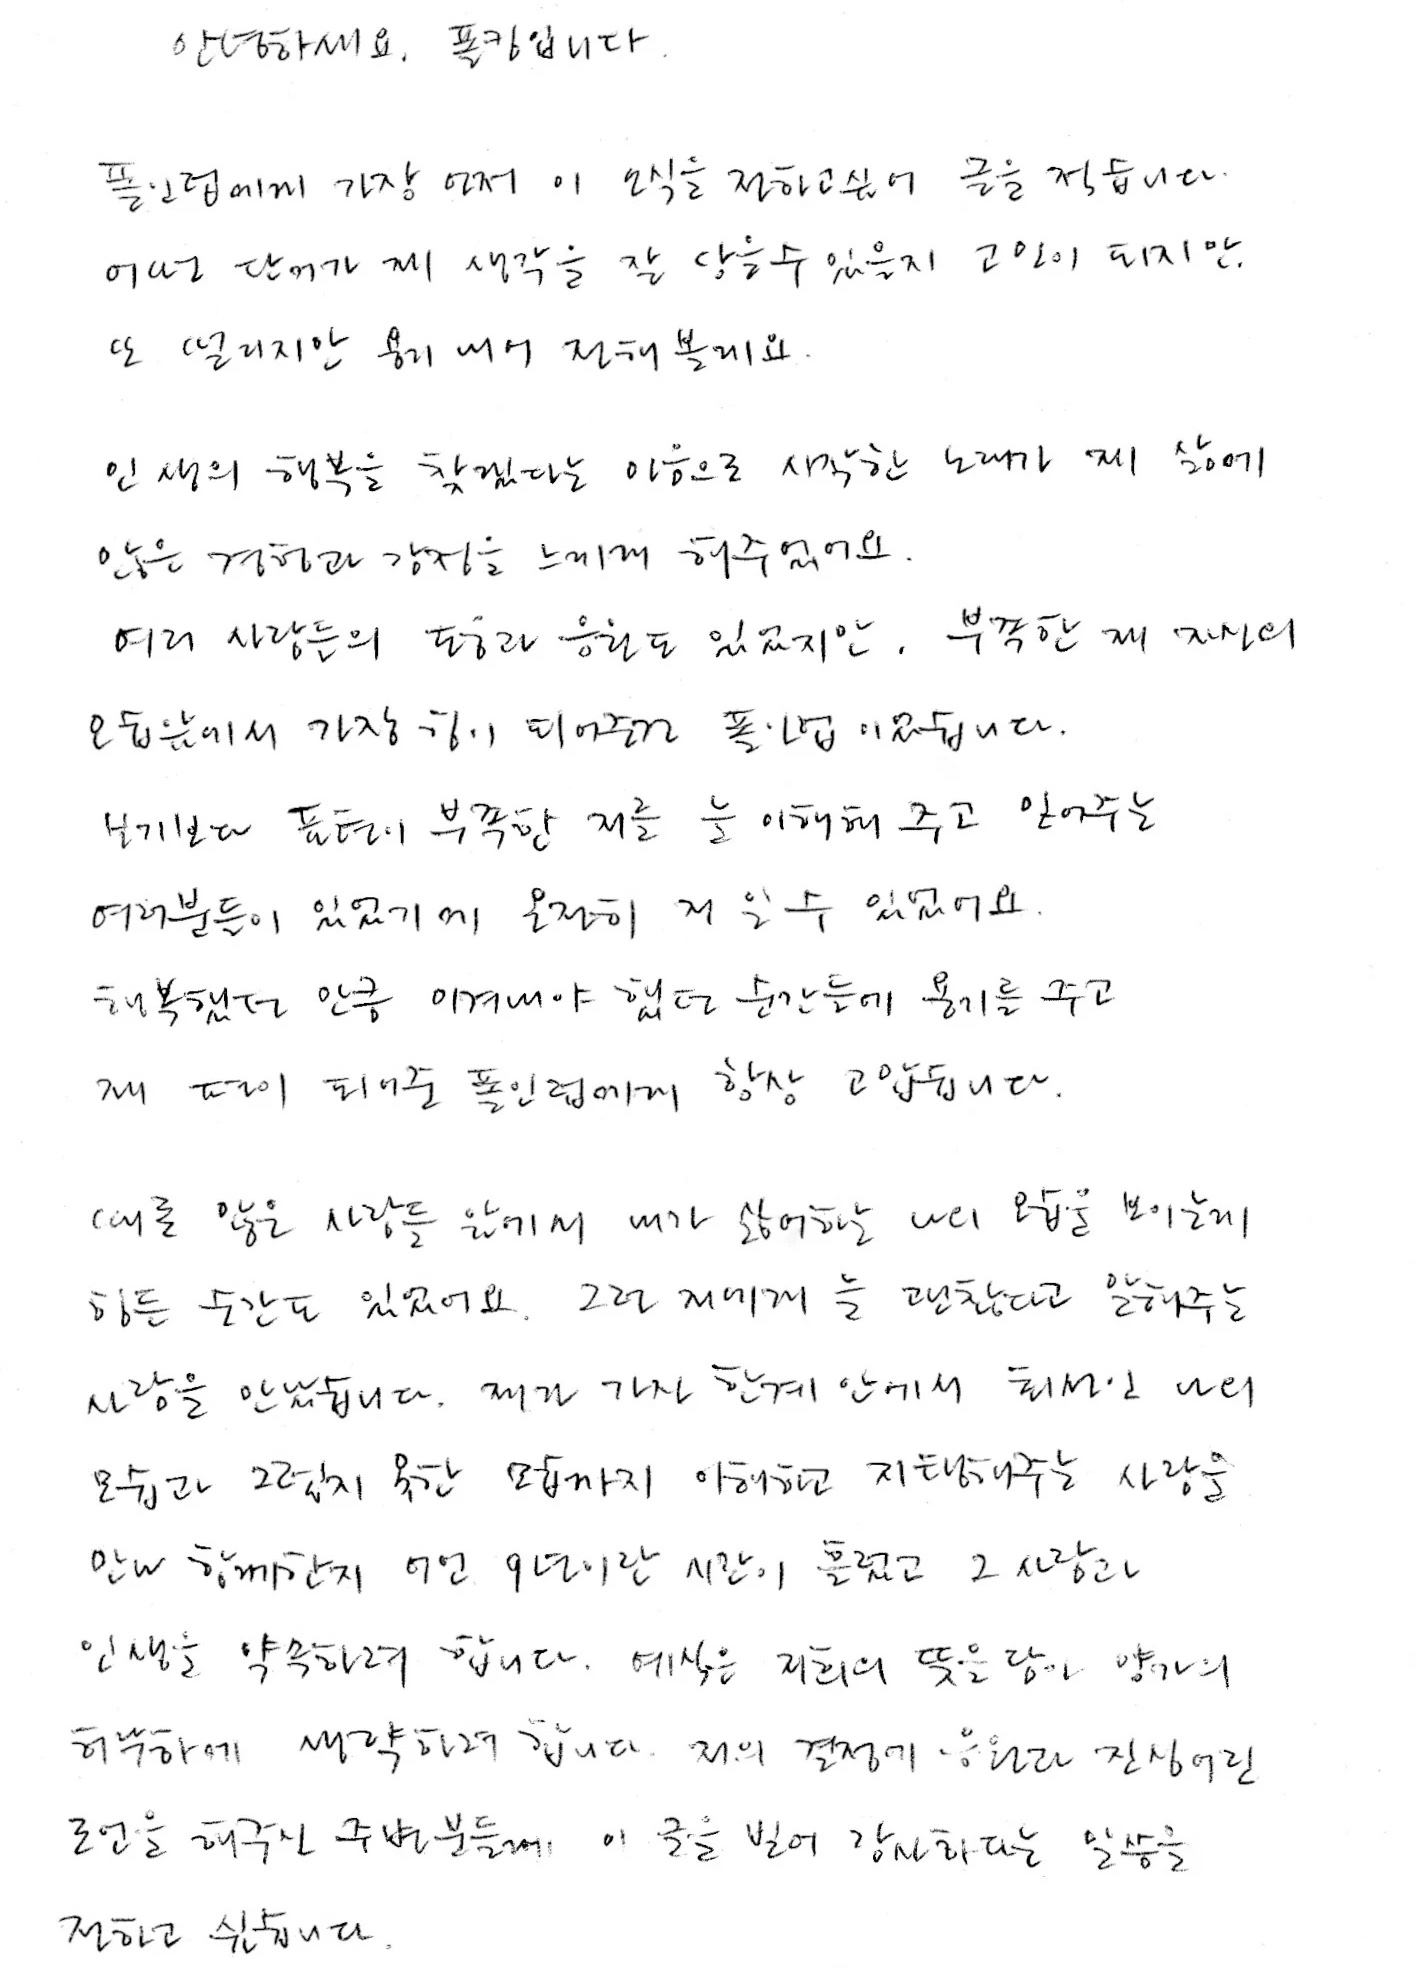 Paul Kim Personally Announces Marriage In Heartfelt Letter